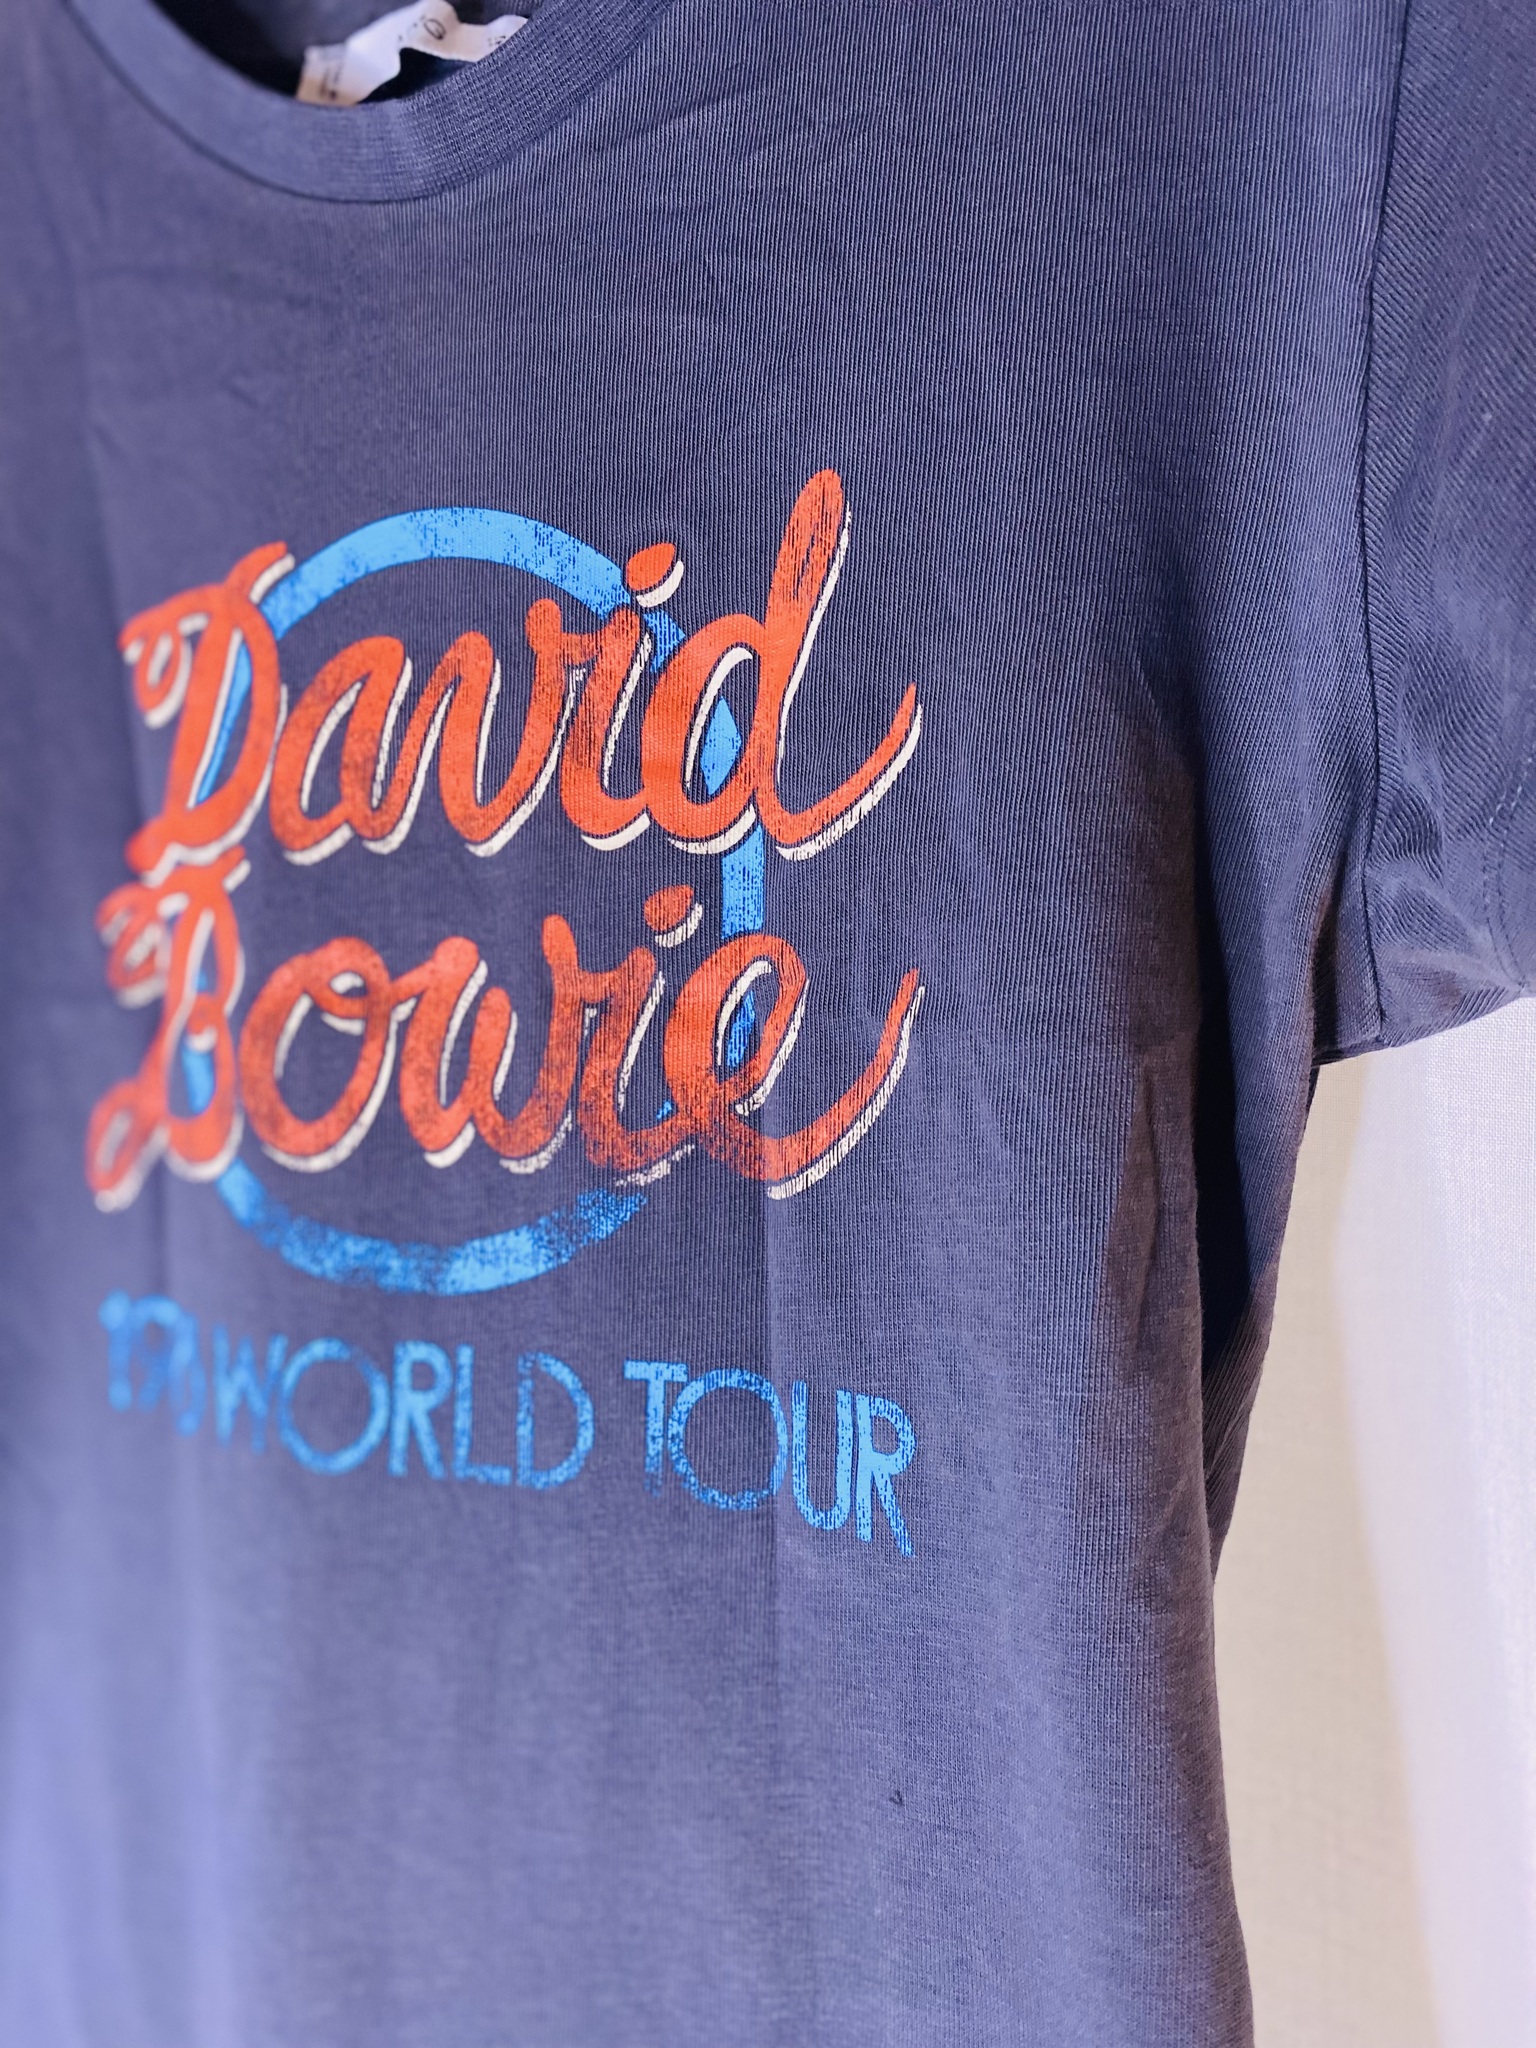 Tisha David Bowie 1978 World Tour